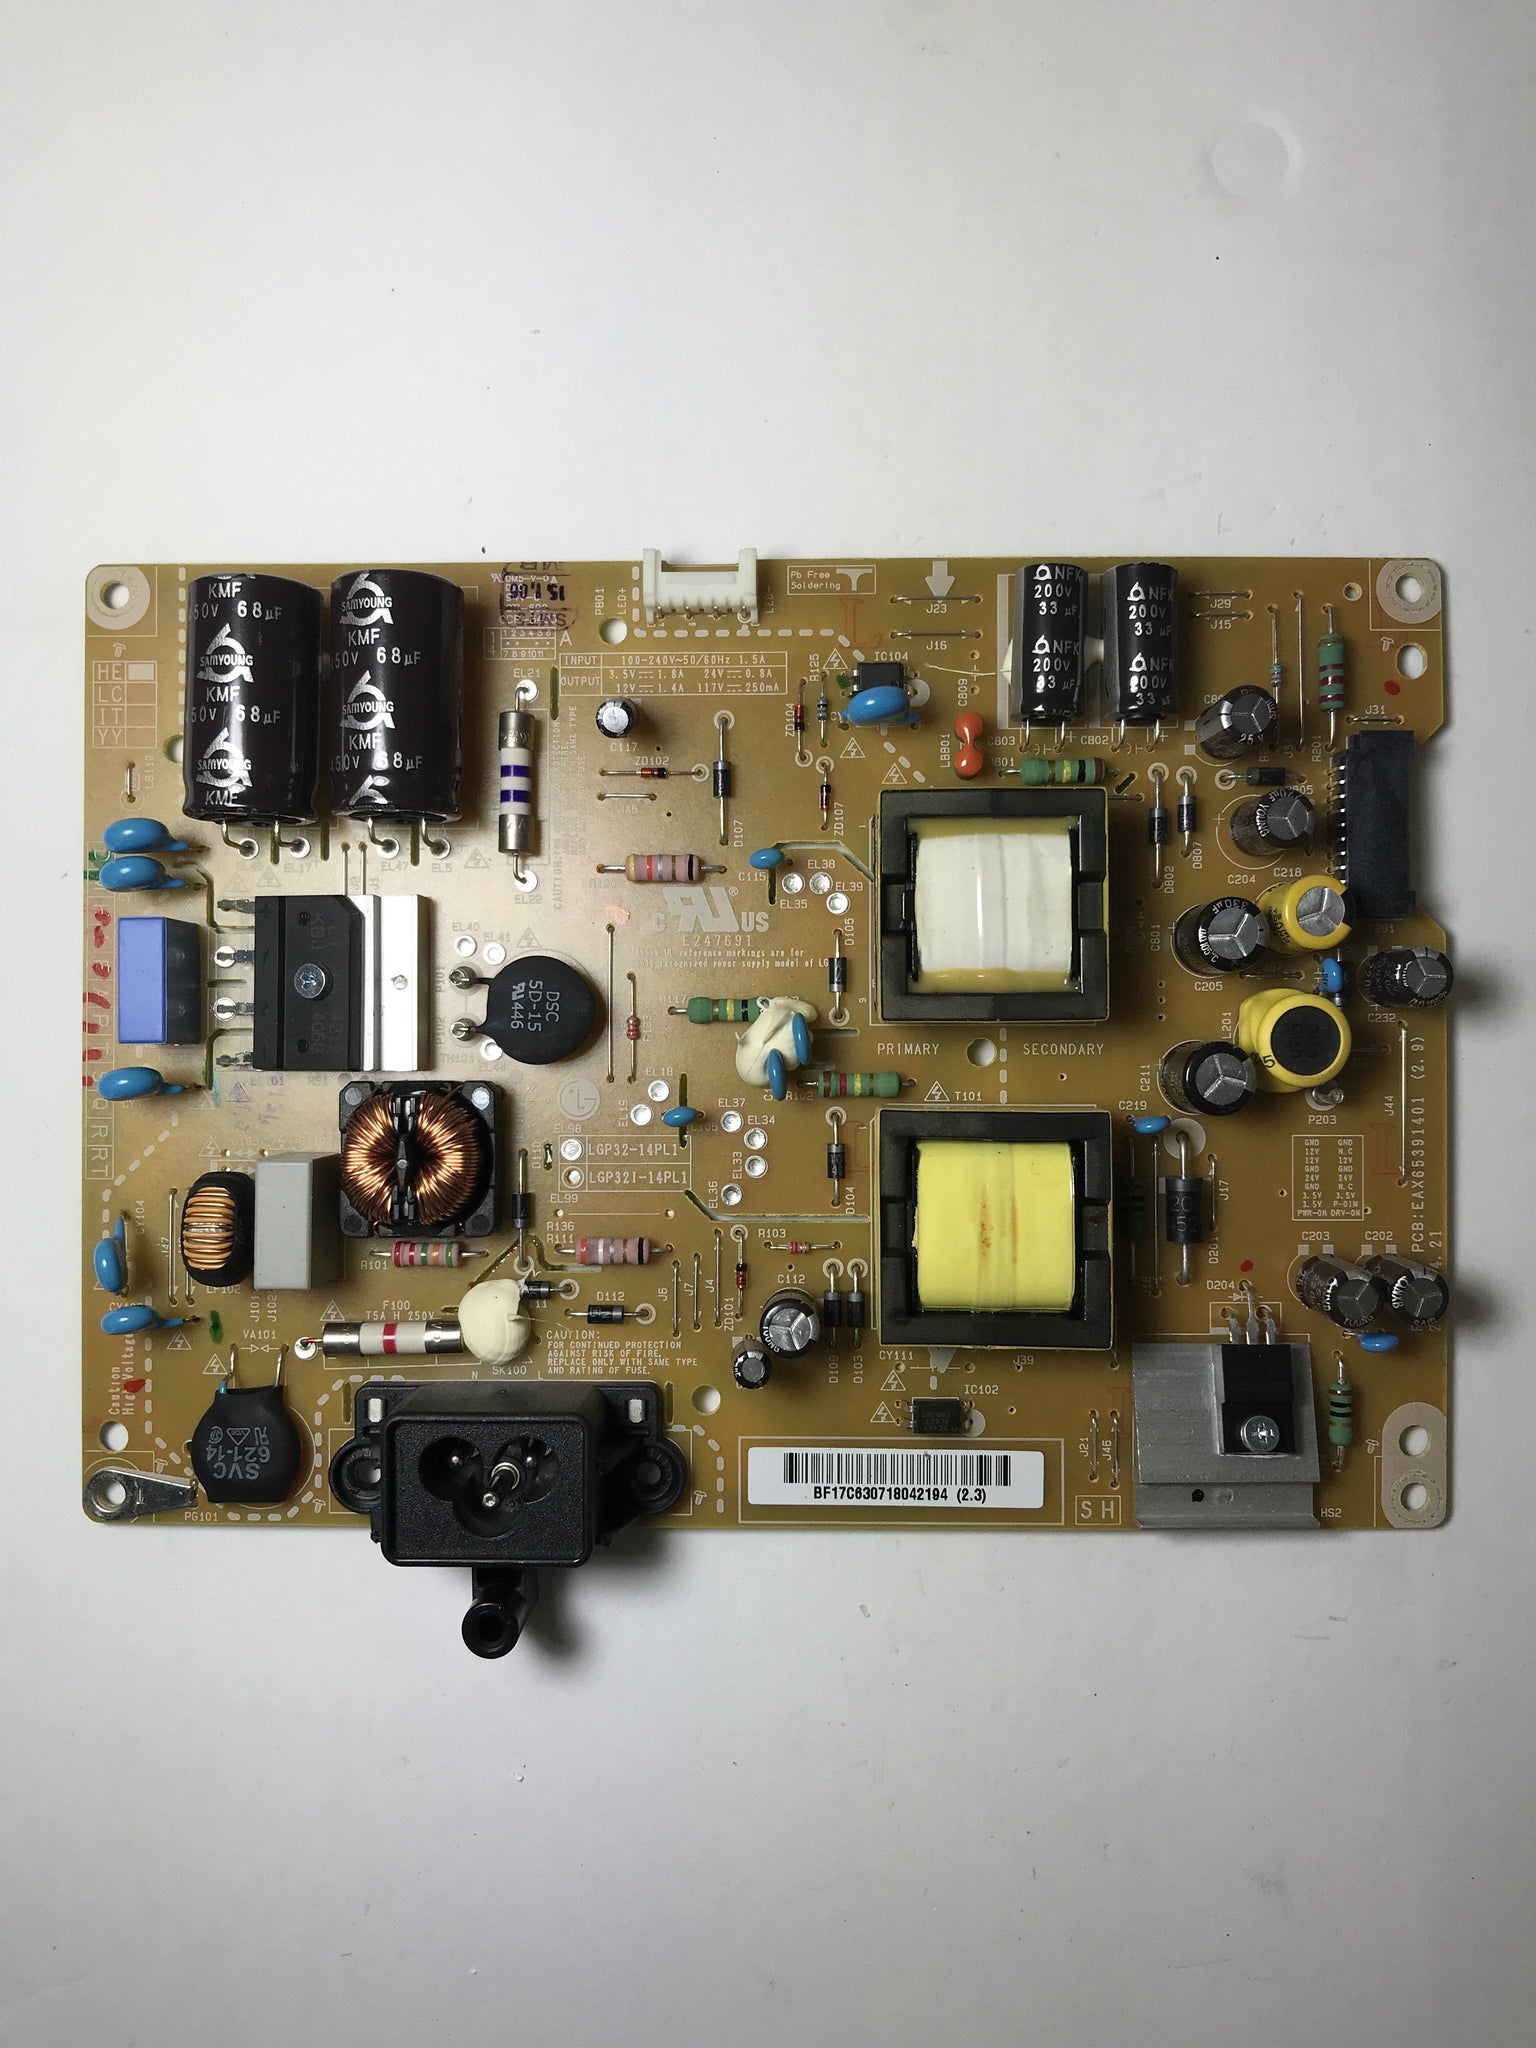 LG EAY63071804 Power Supply / LED Board